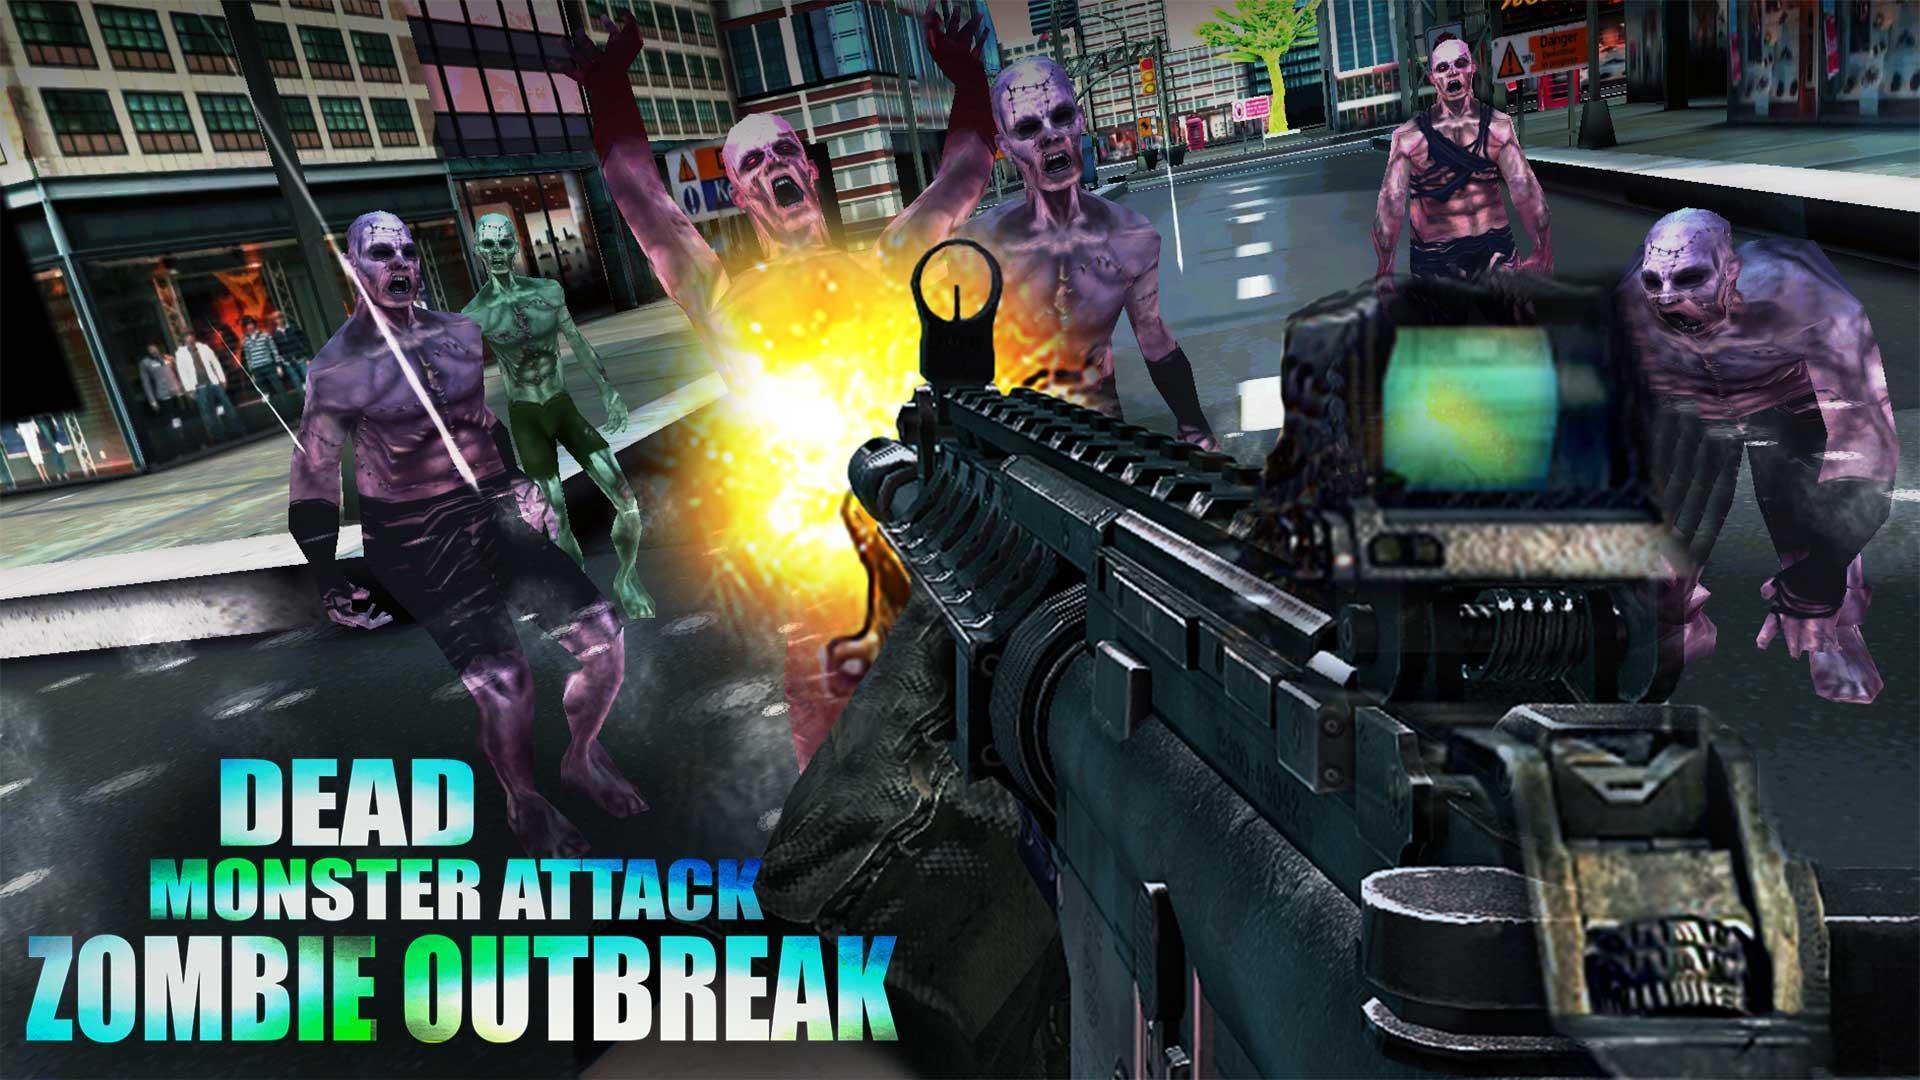 The fallen order zombie outbreak. Игра на андроид с открытым миром монстры атакуют ночью. Игра ночная атака зомби.